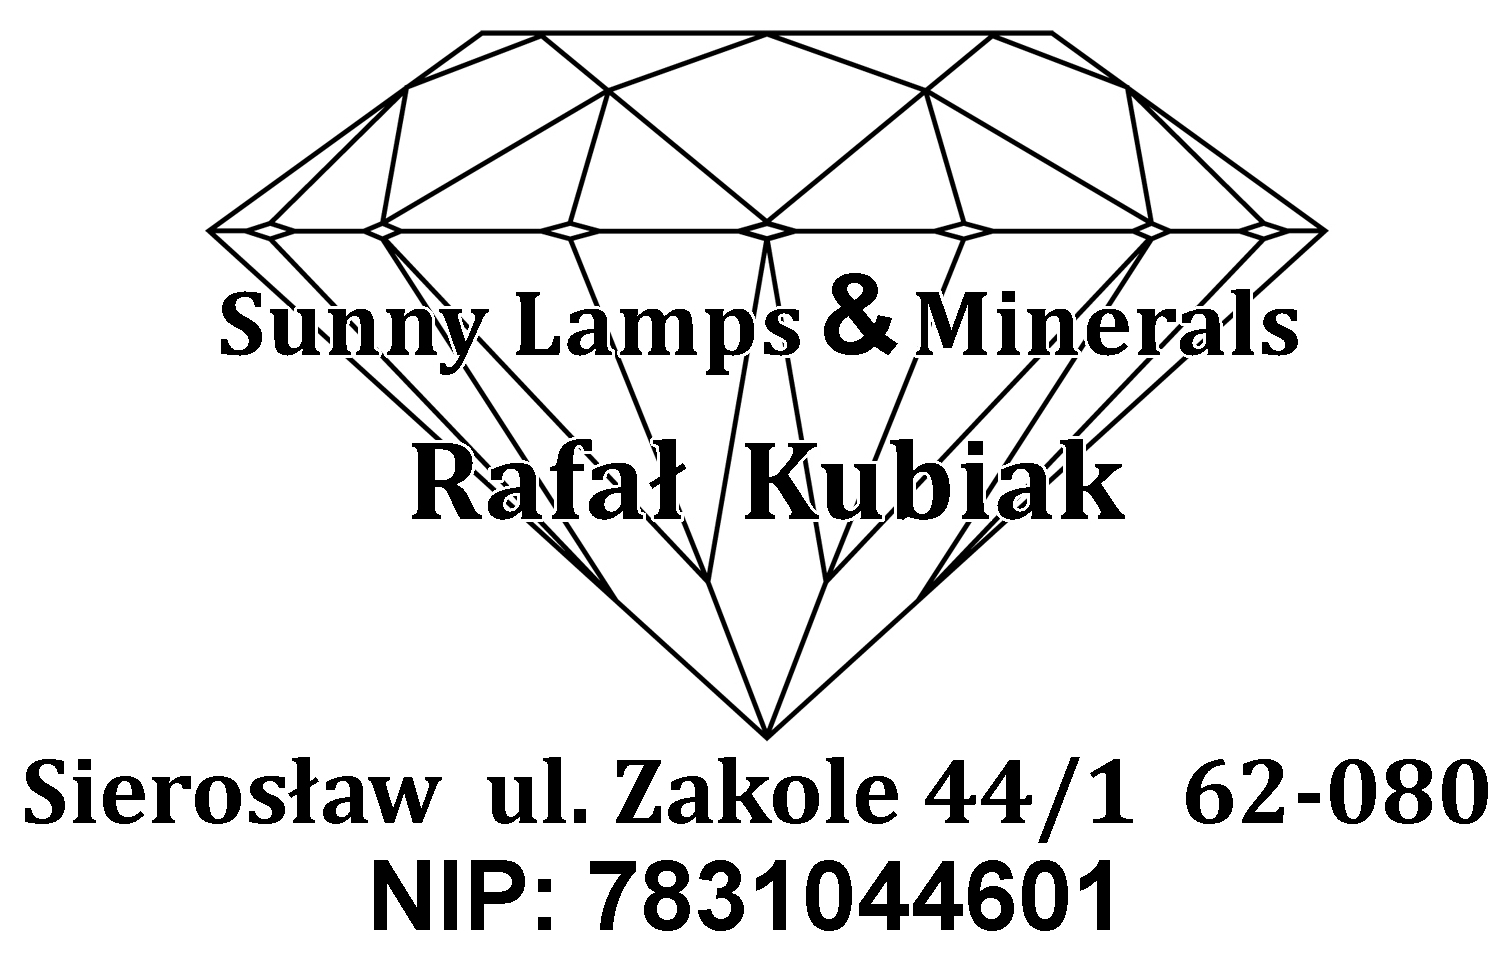 Sunny Lamps & Minerals